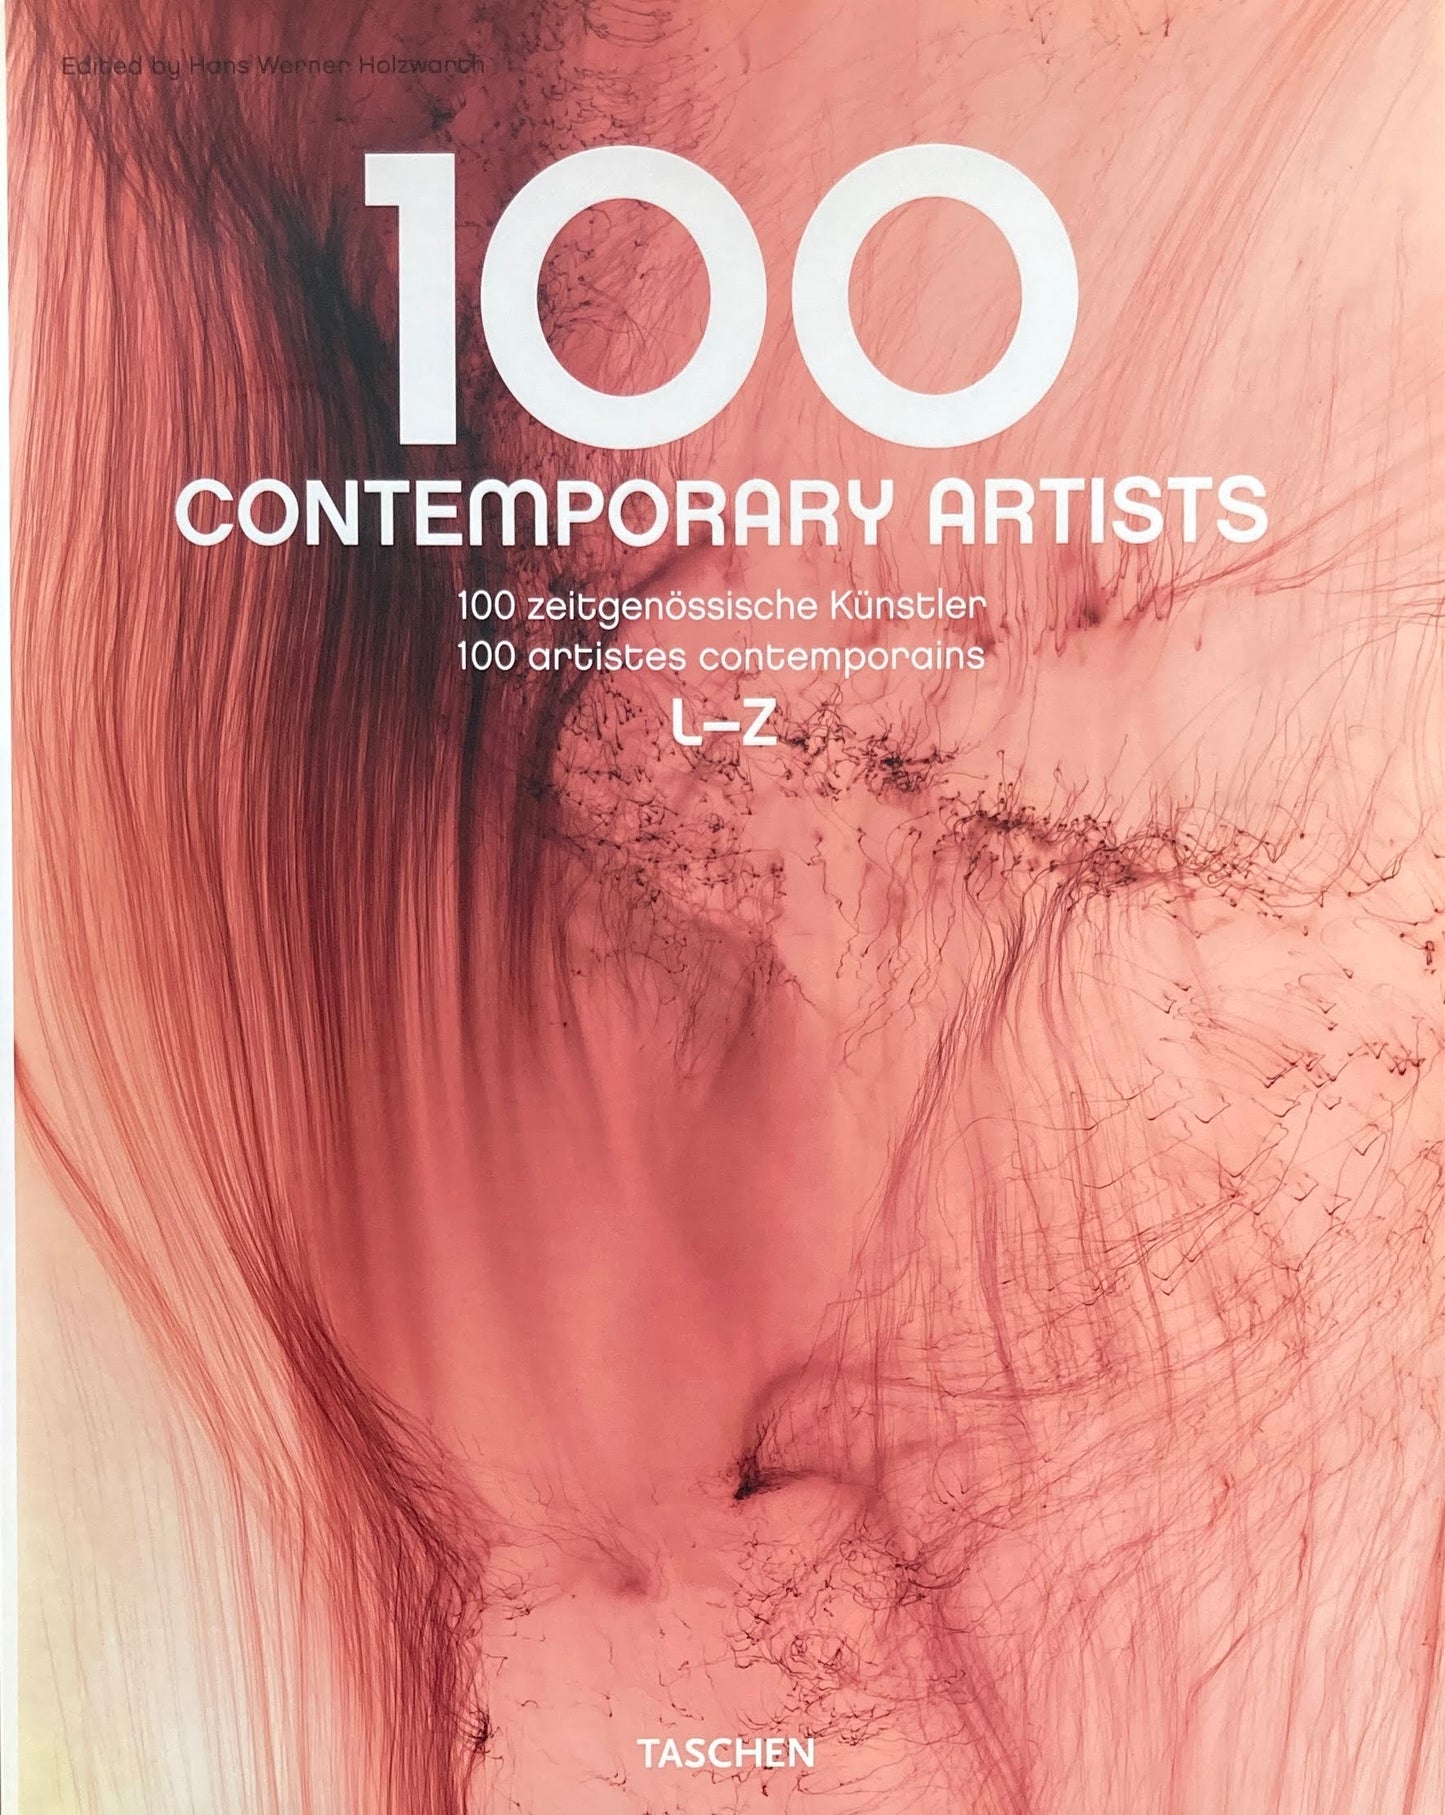 100 Contemporary Artists  edited  Hans Werner Holzwarth